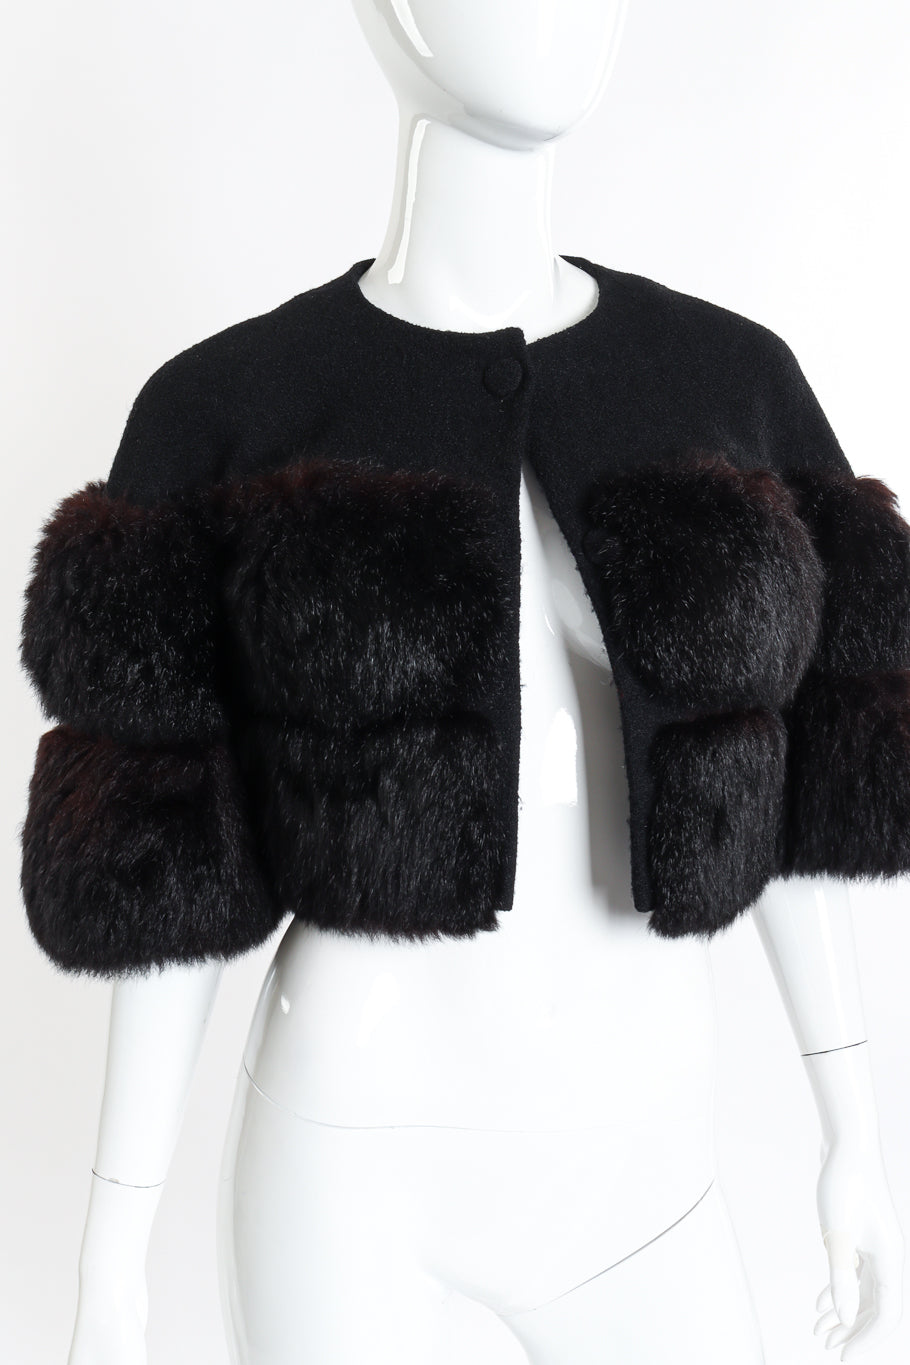 Vintage Pauline Trigere Cropped Fur Jacket front on mannequin closeup @recessla